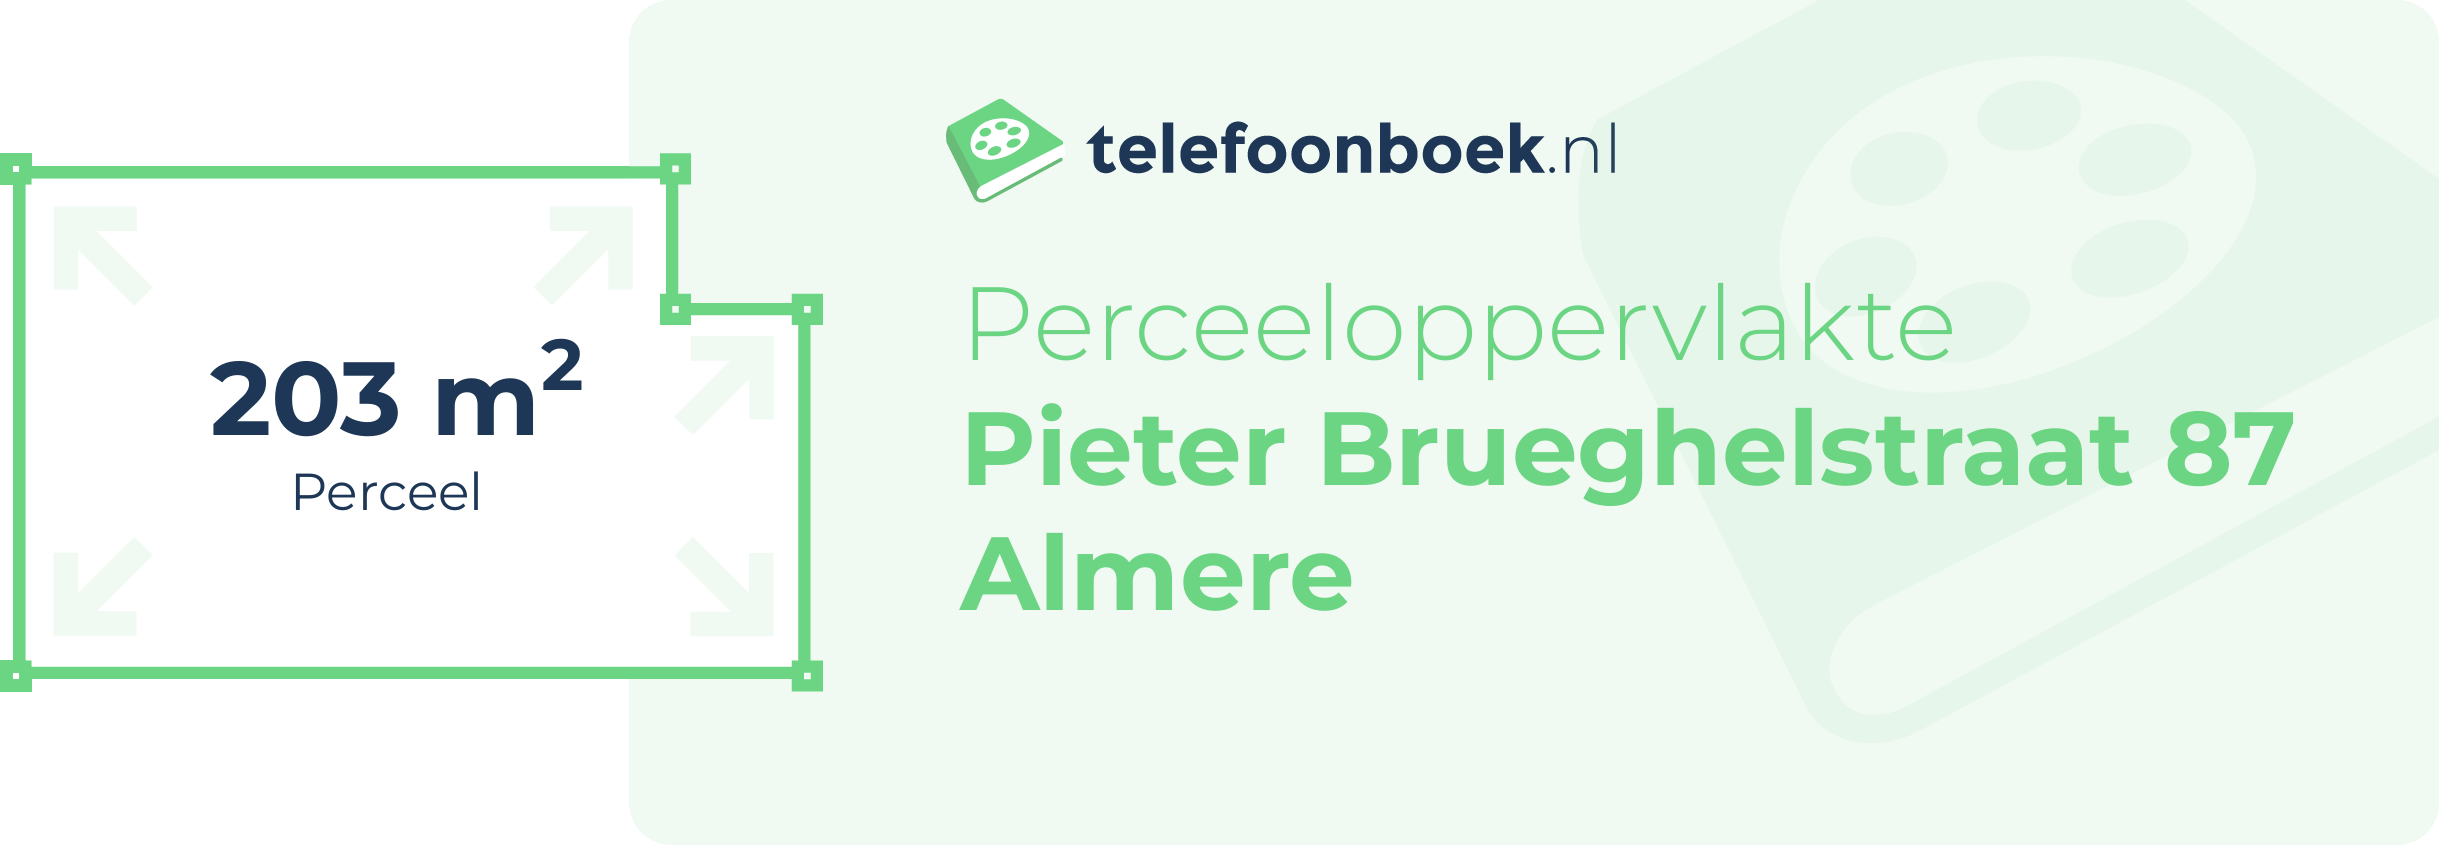 Perceeloppervlakte Pieter Brueghelstraat 87 Almere